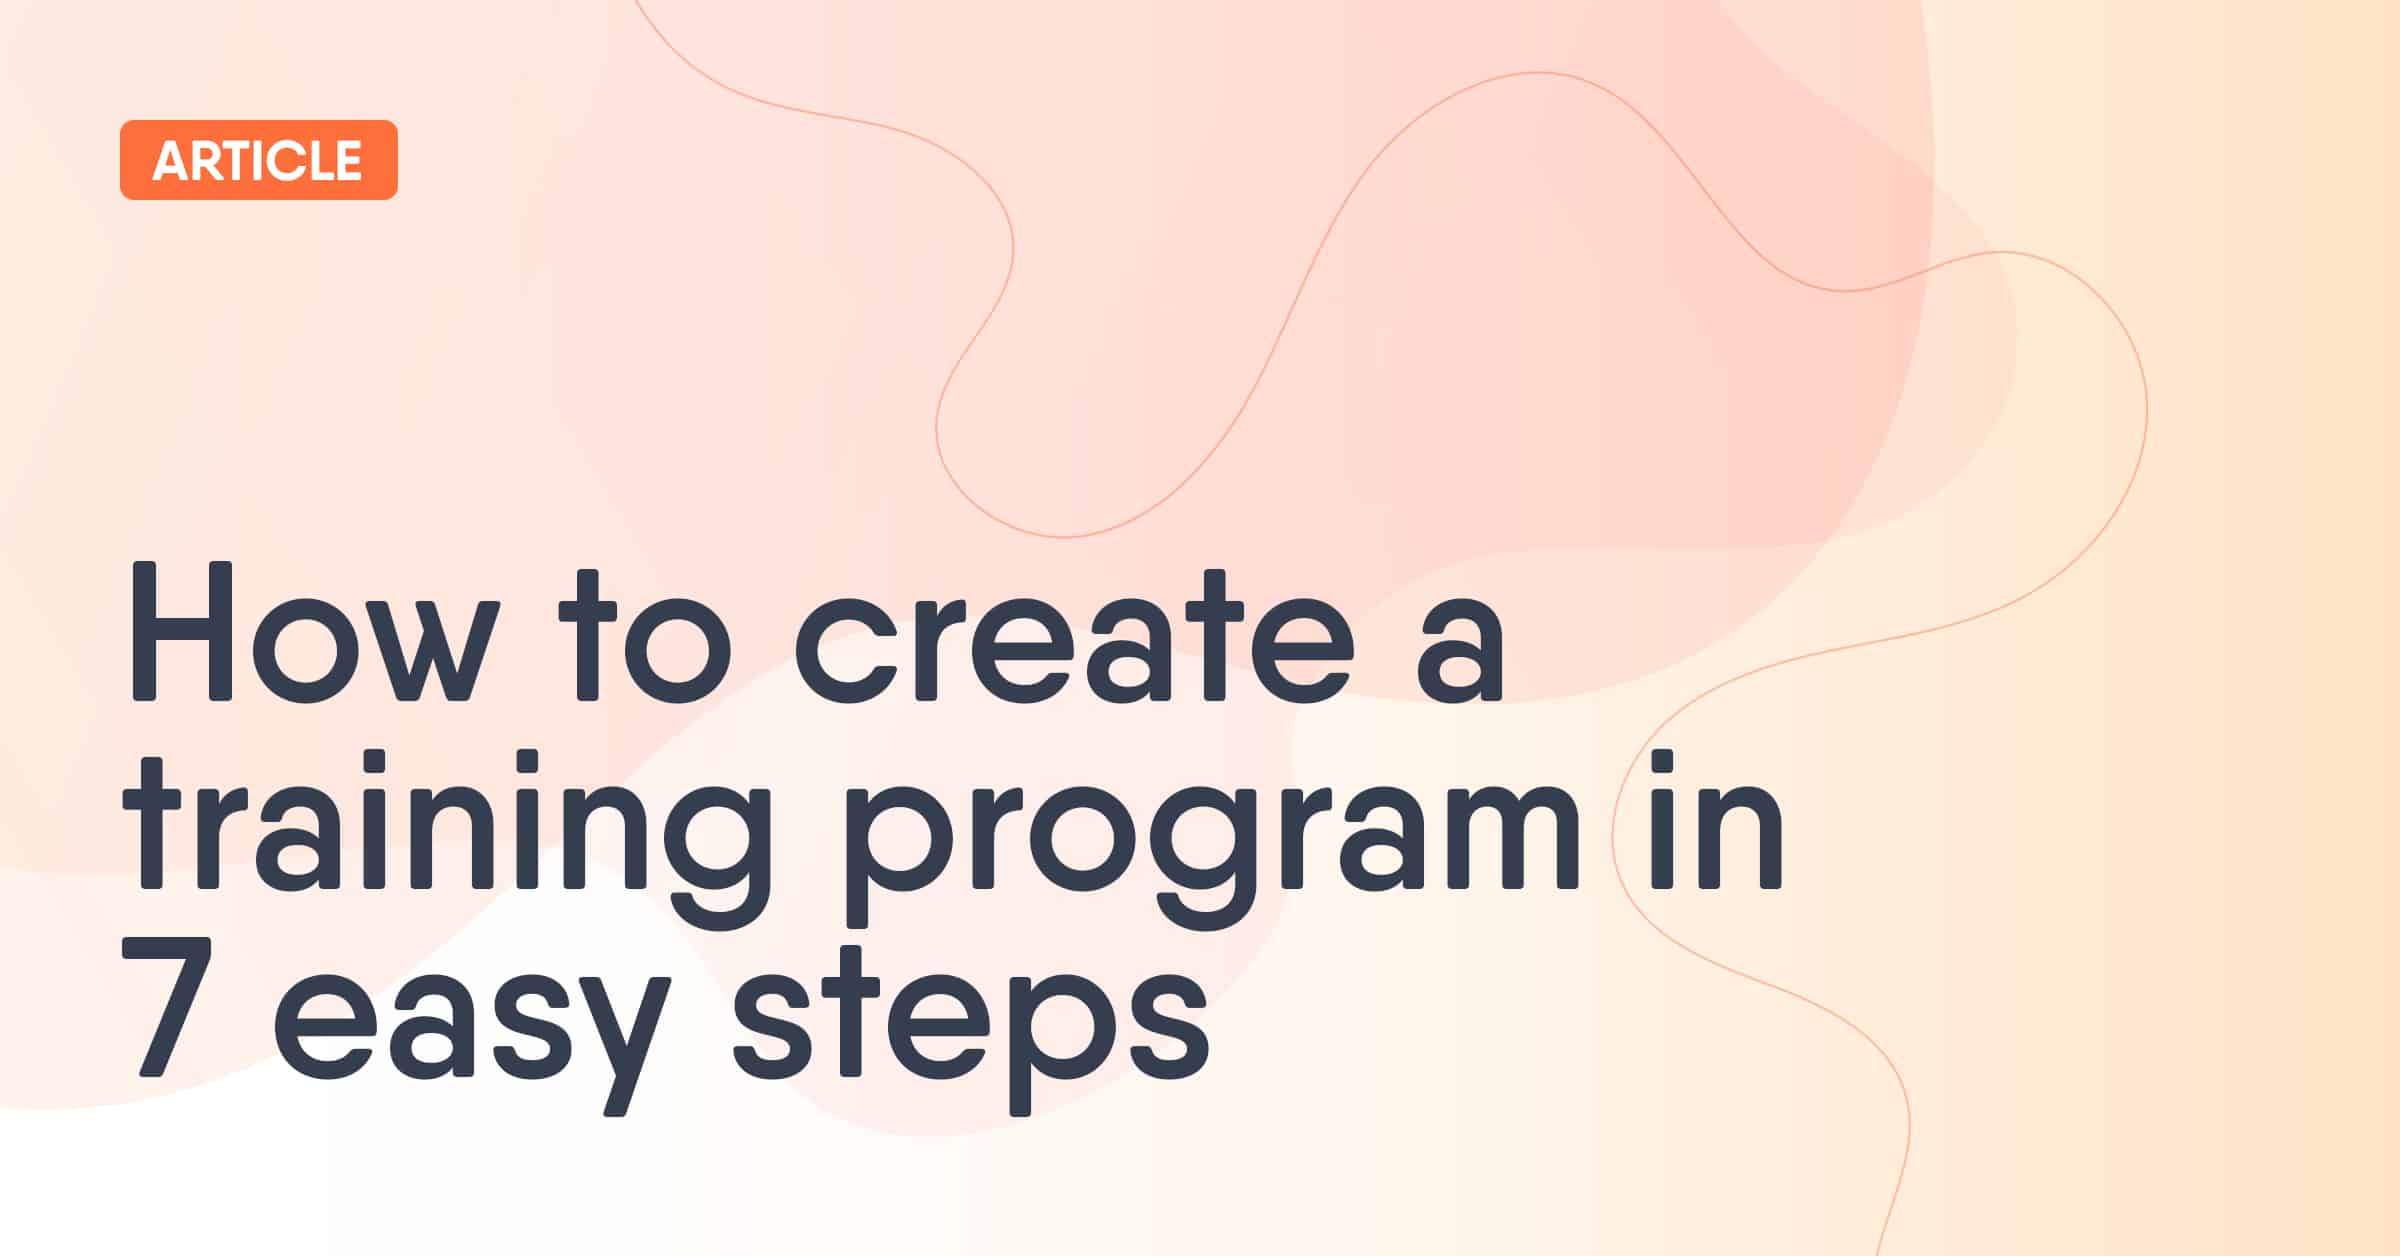 https://www.easygenerator.com/wp-content/uploads/2019/06/How-to-create-a-training-program.jpg